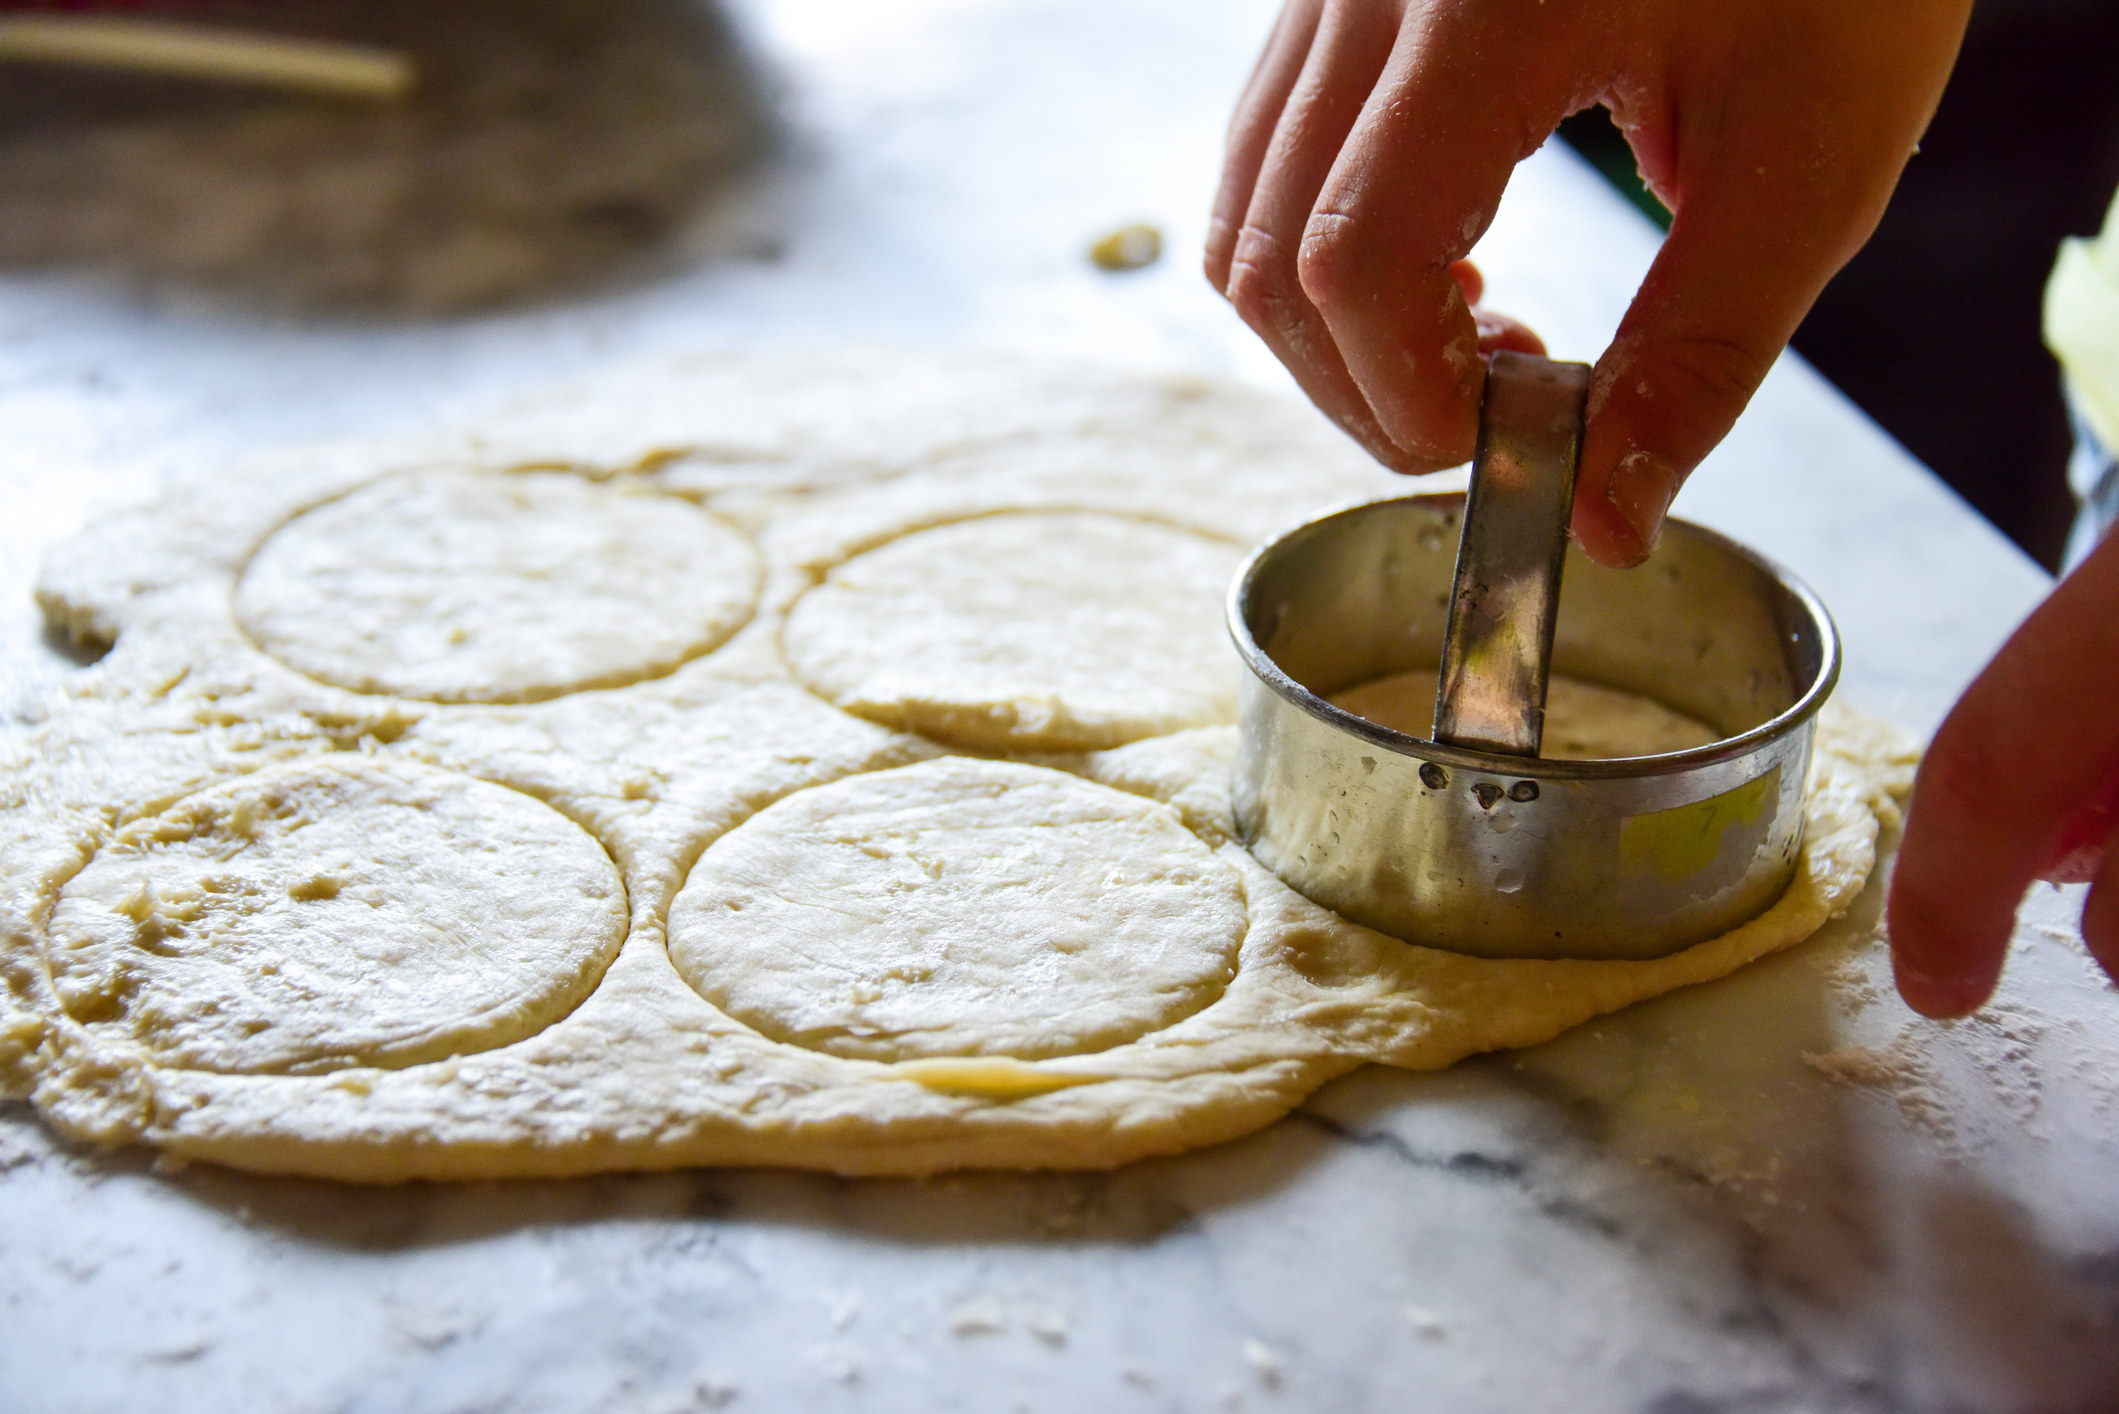 Cutting circles out of dough.